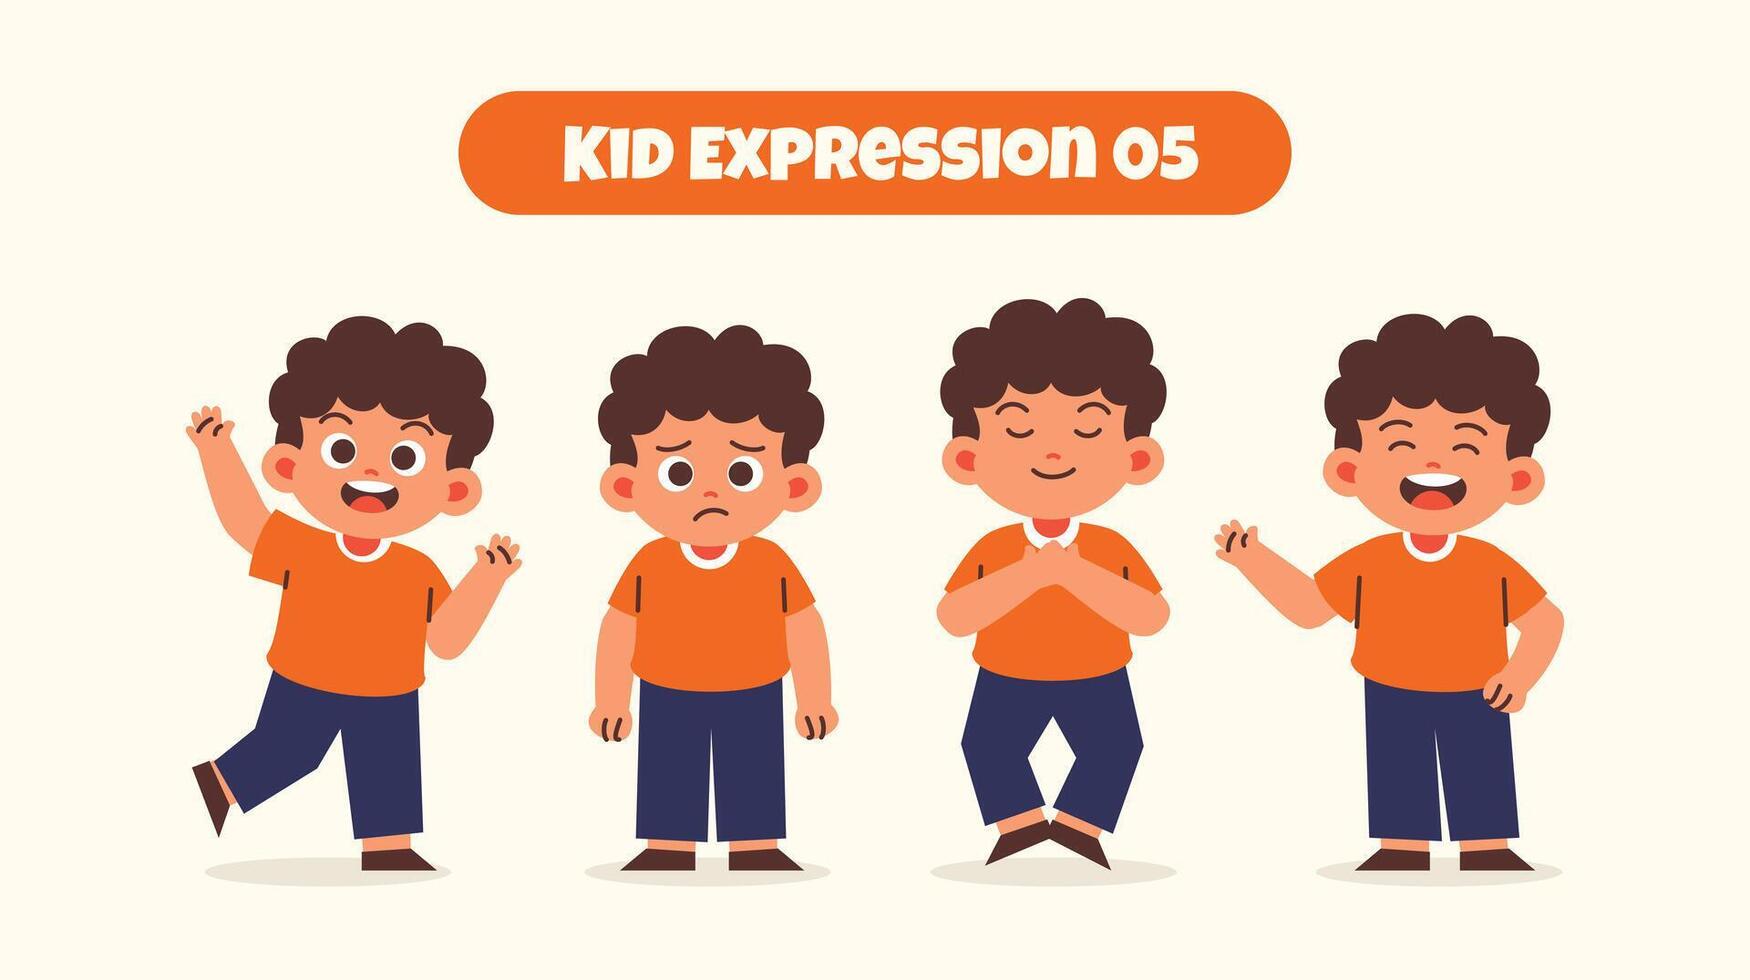 pojke unge i olika uttryck och gest vektor